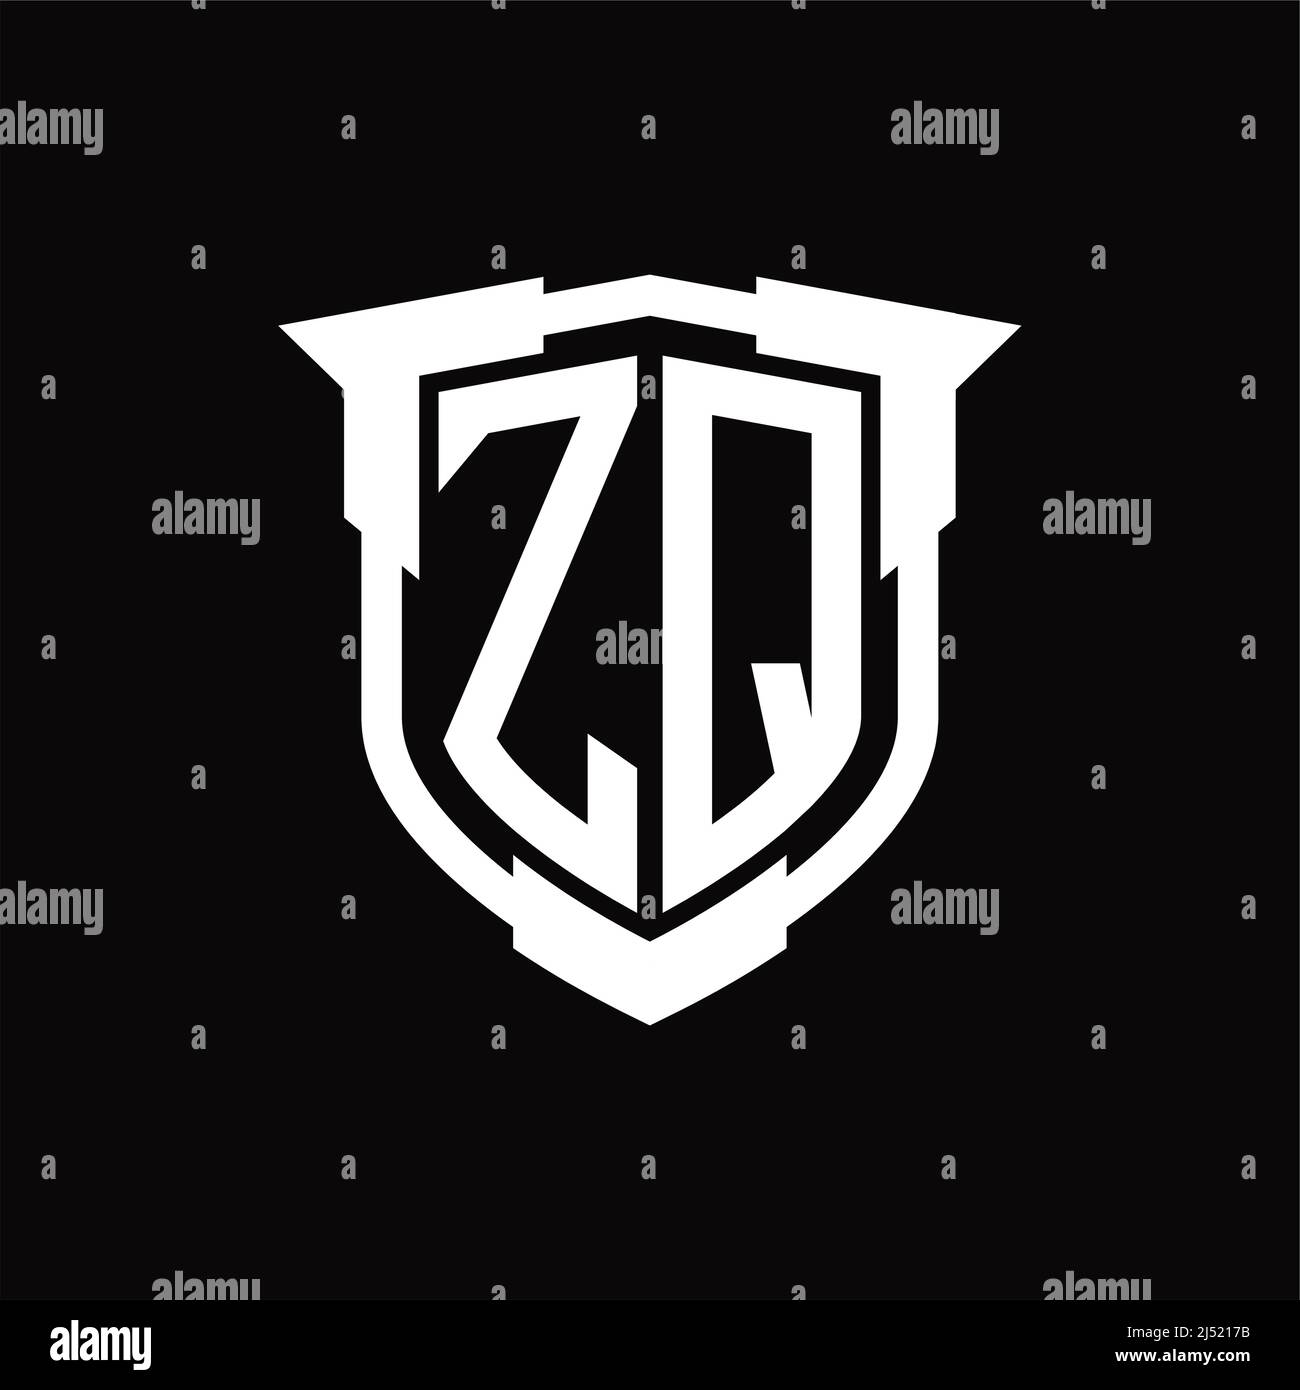 Zq Logo Monogram Letter With Shield Shape Design Template Stock Vector